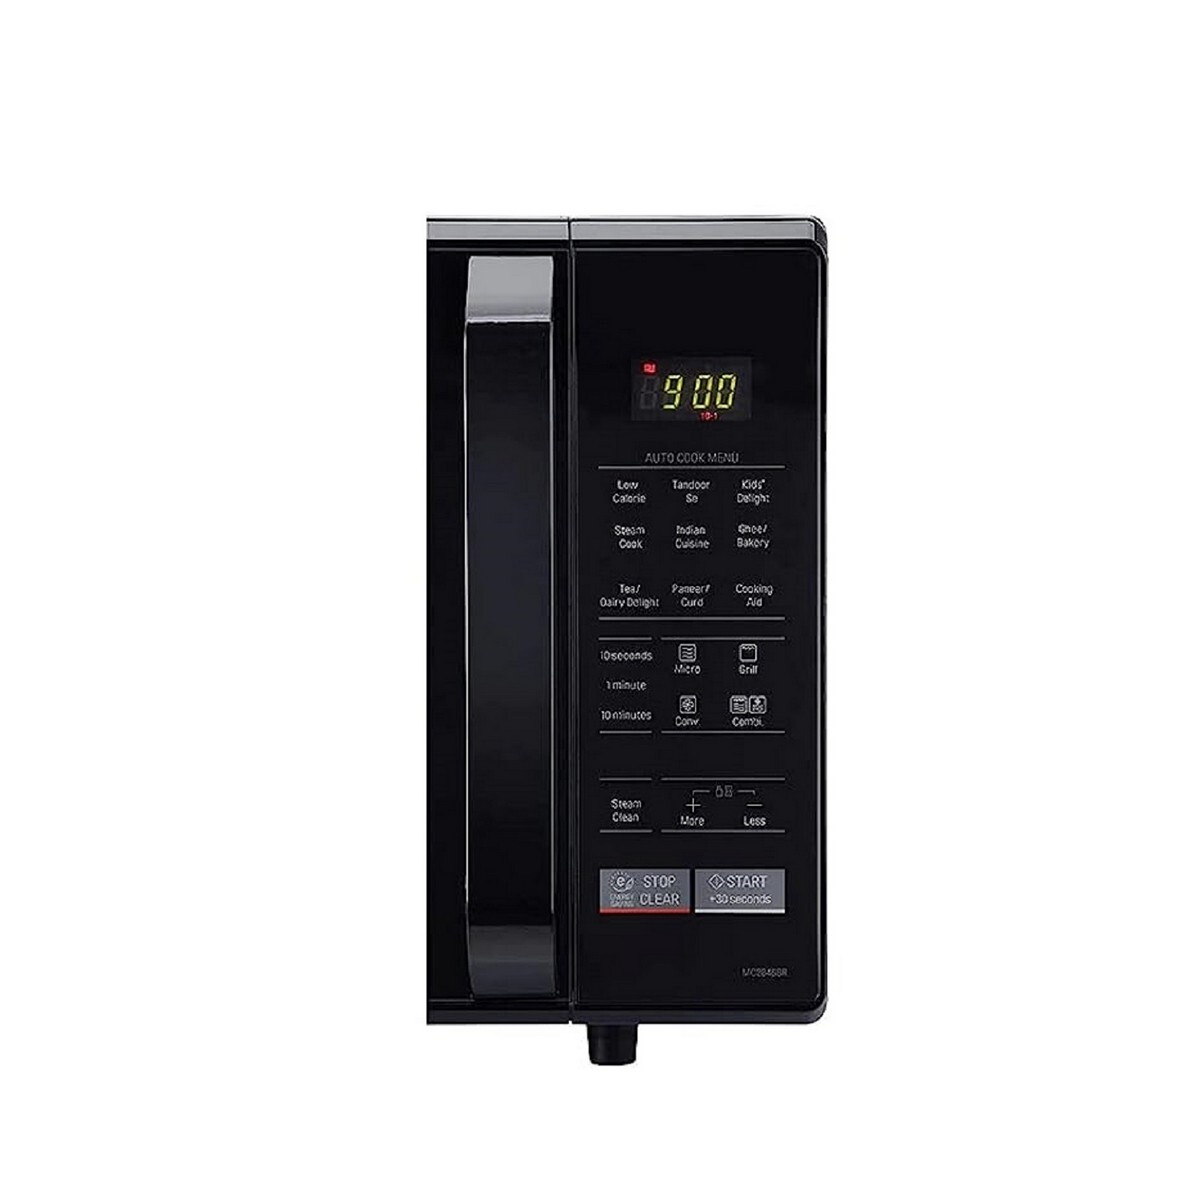 LG 28 L Convection Microwave Oven MC2846BR Black